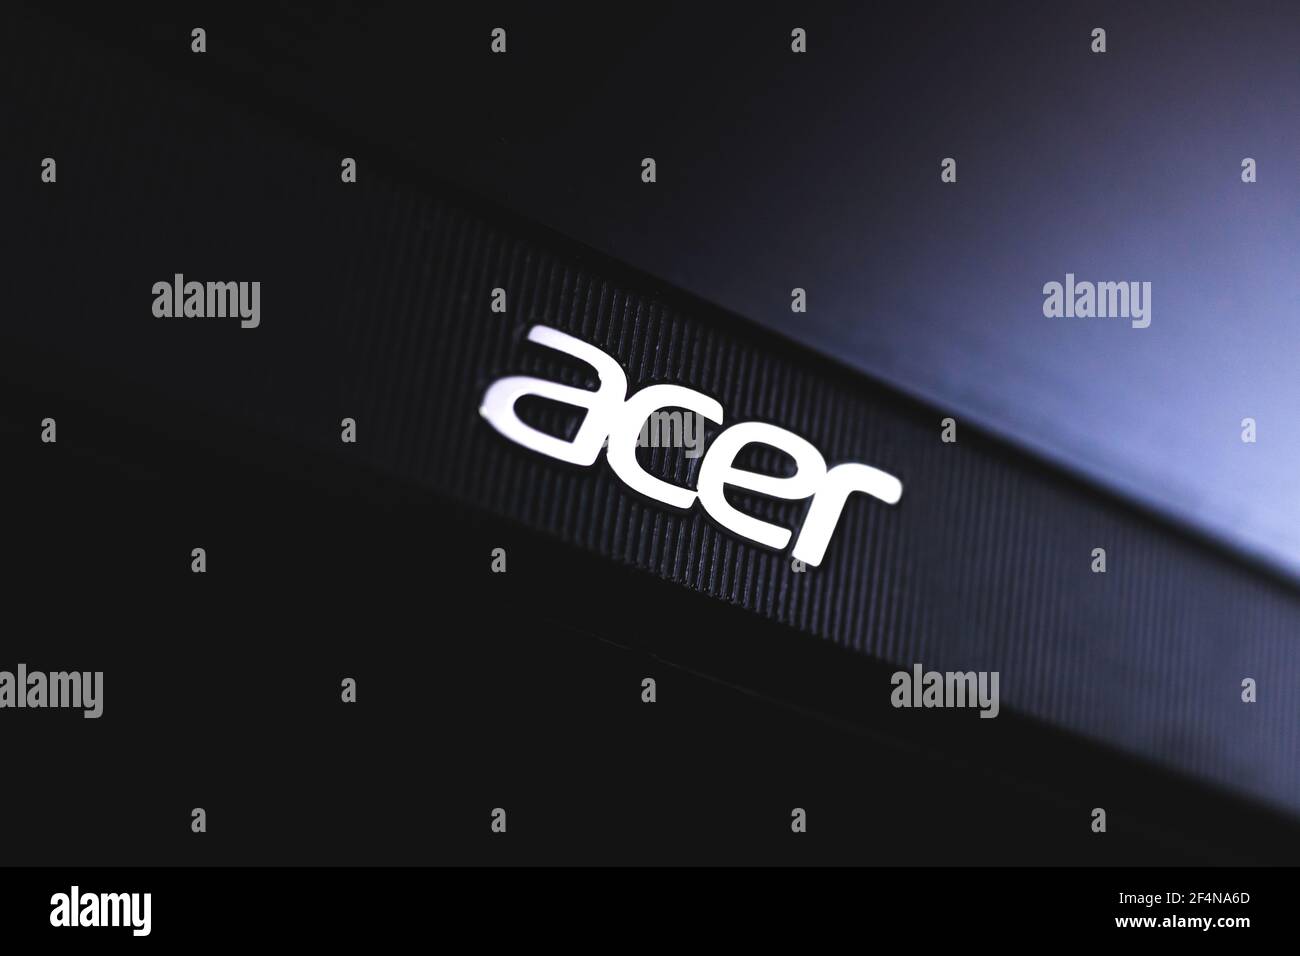 Acer logo HD wallpapers free download | Wallpaperbetter